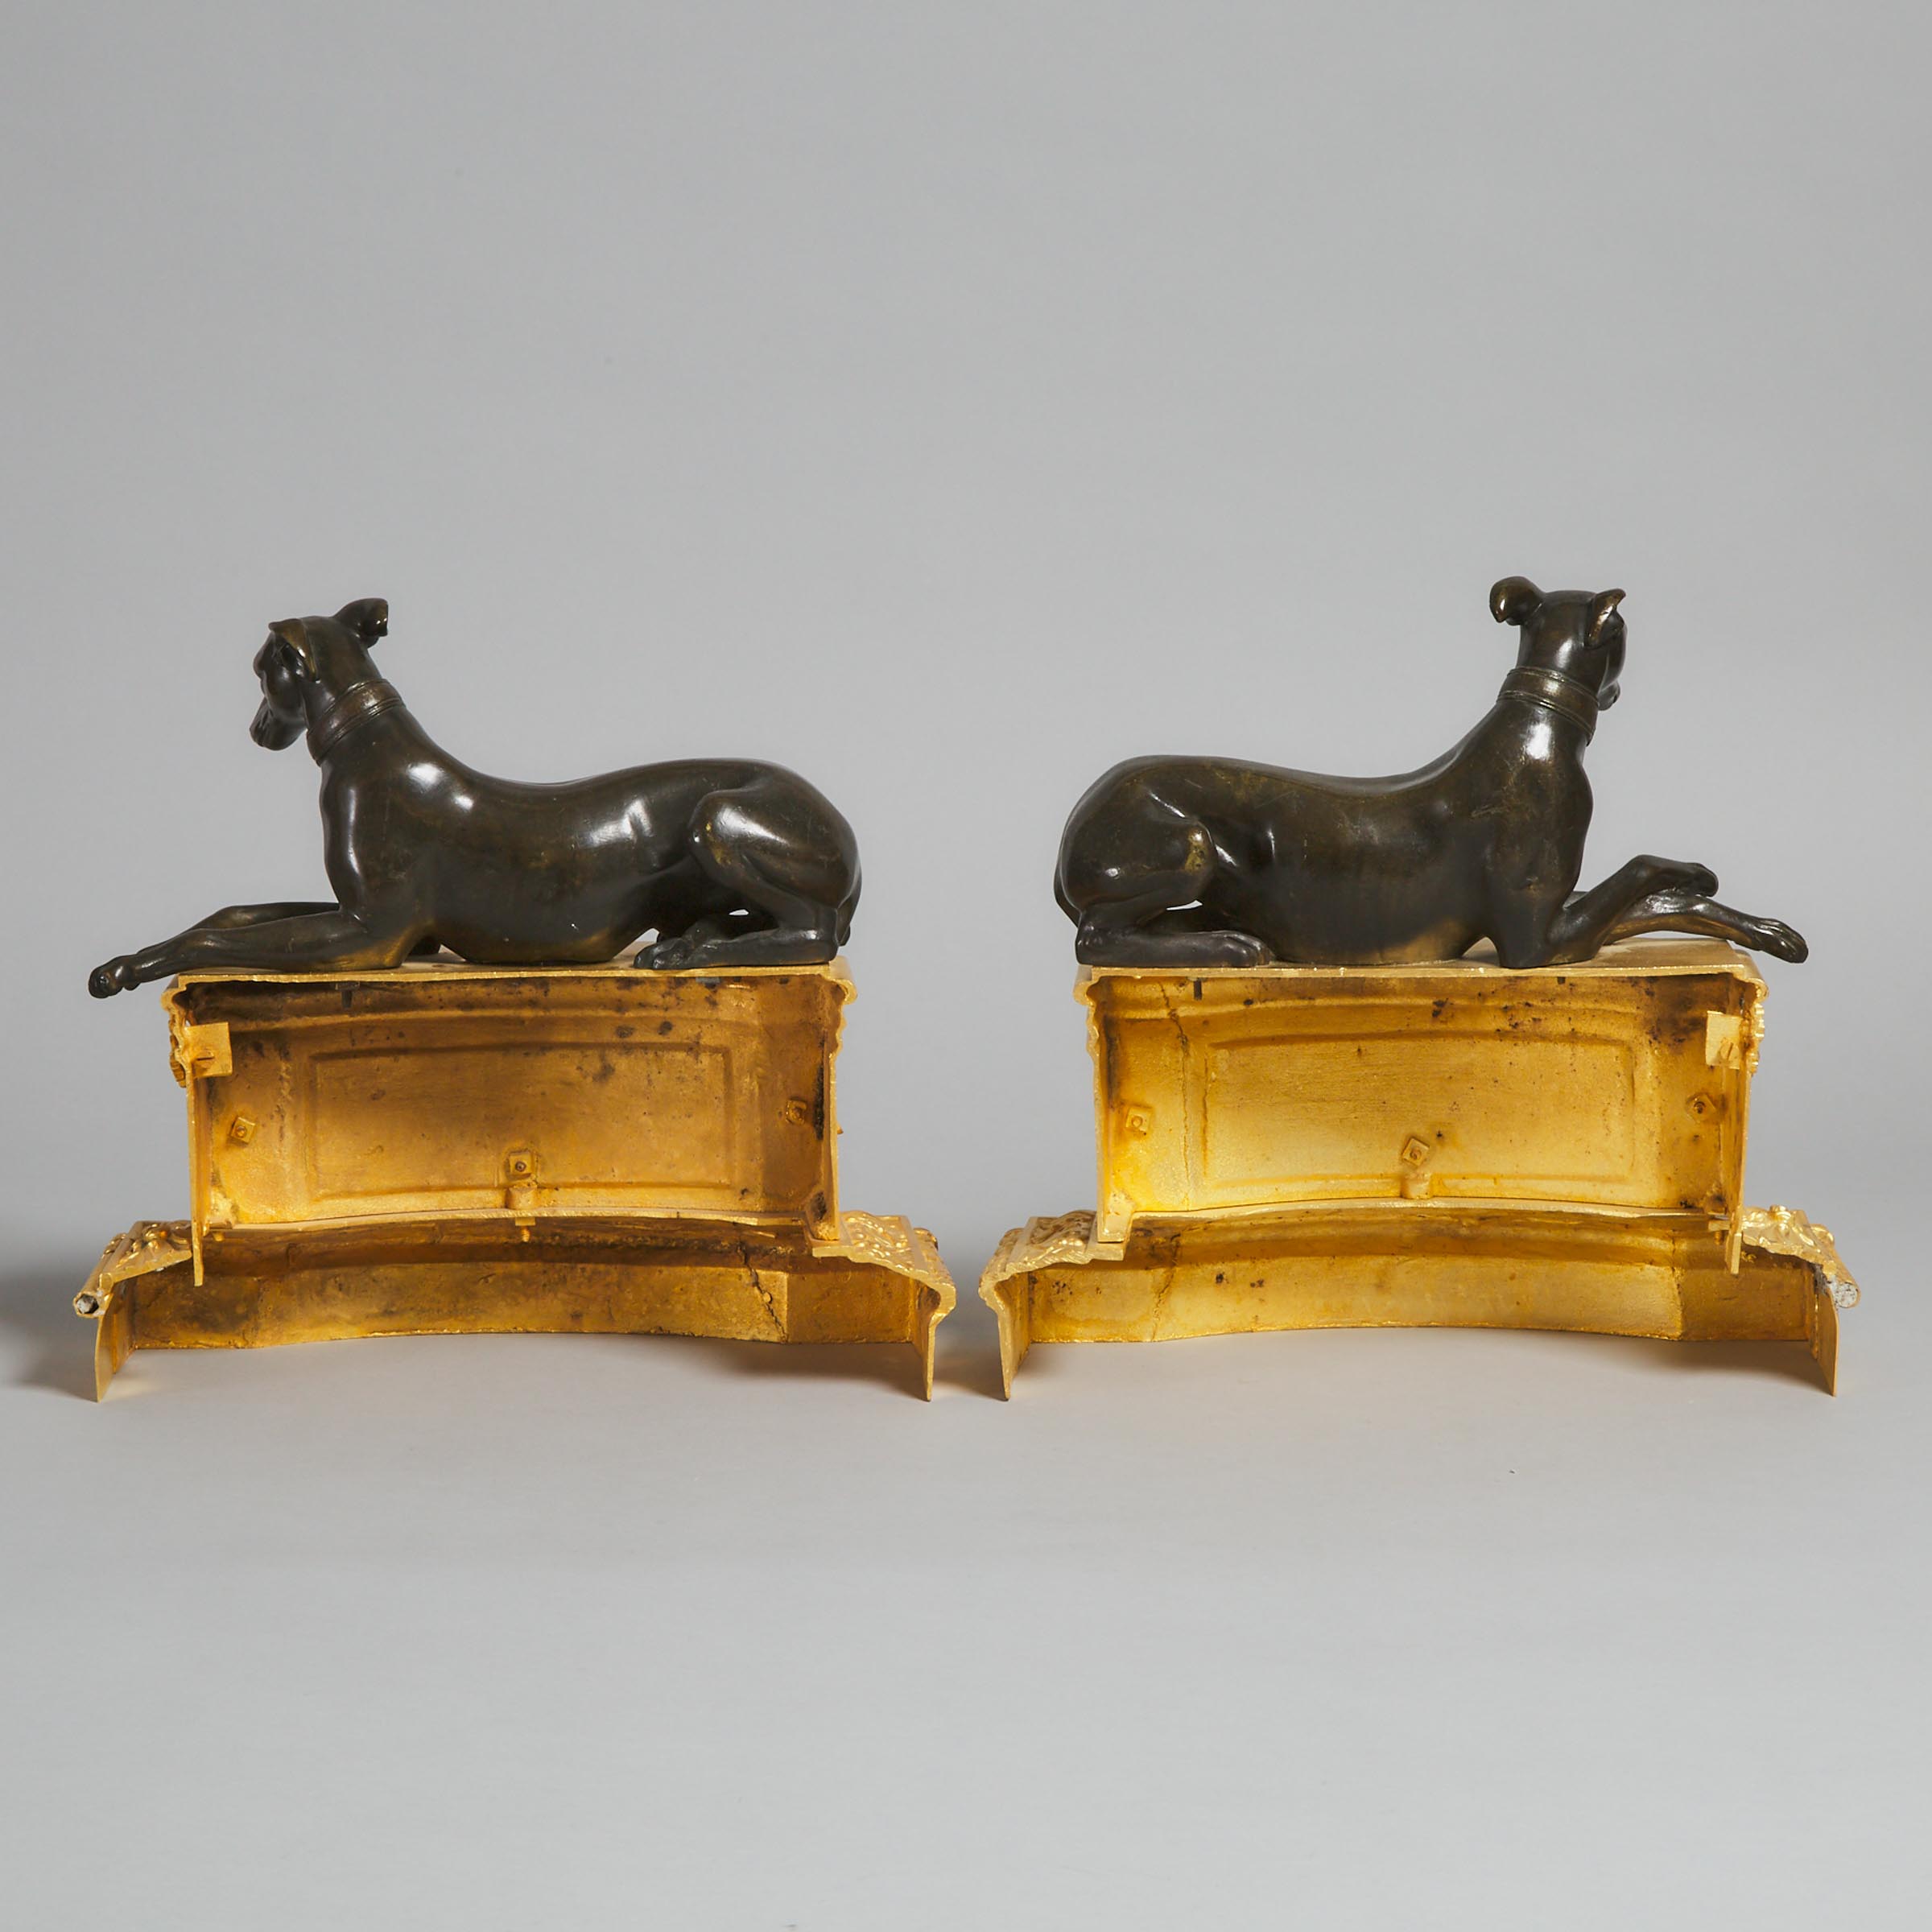 Pair of Louis XVI Gilt Bronze and Ormolu Greyhound Form Chenets, 2nd half, 18th century